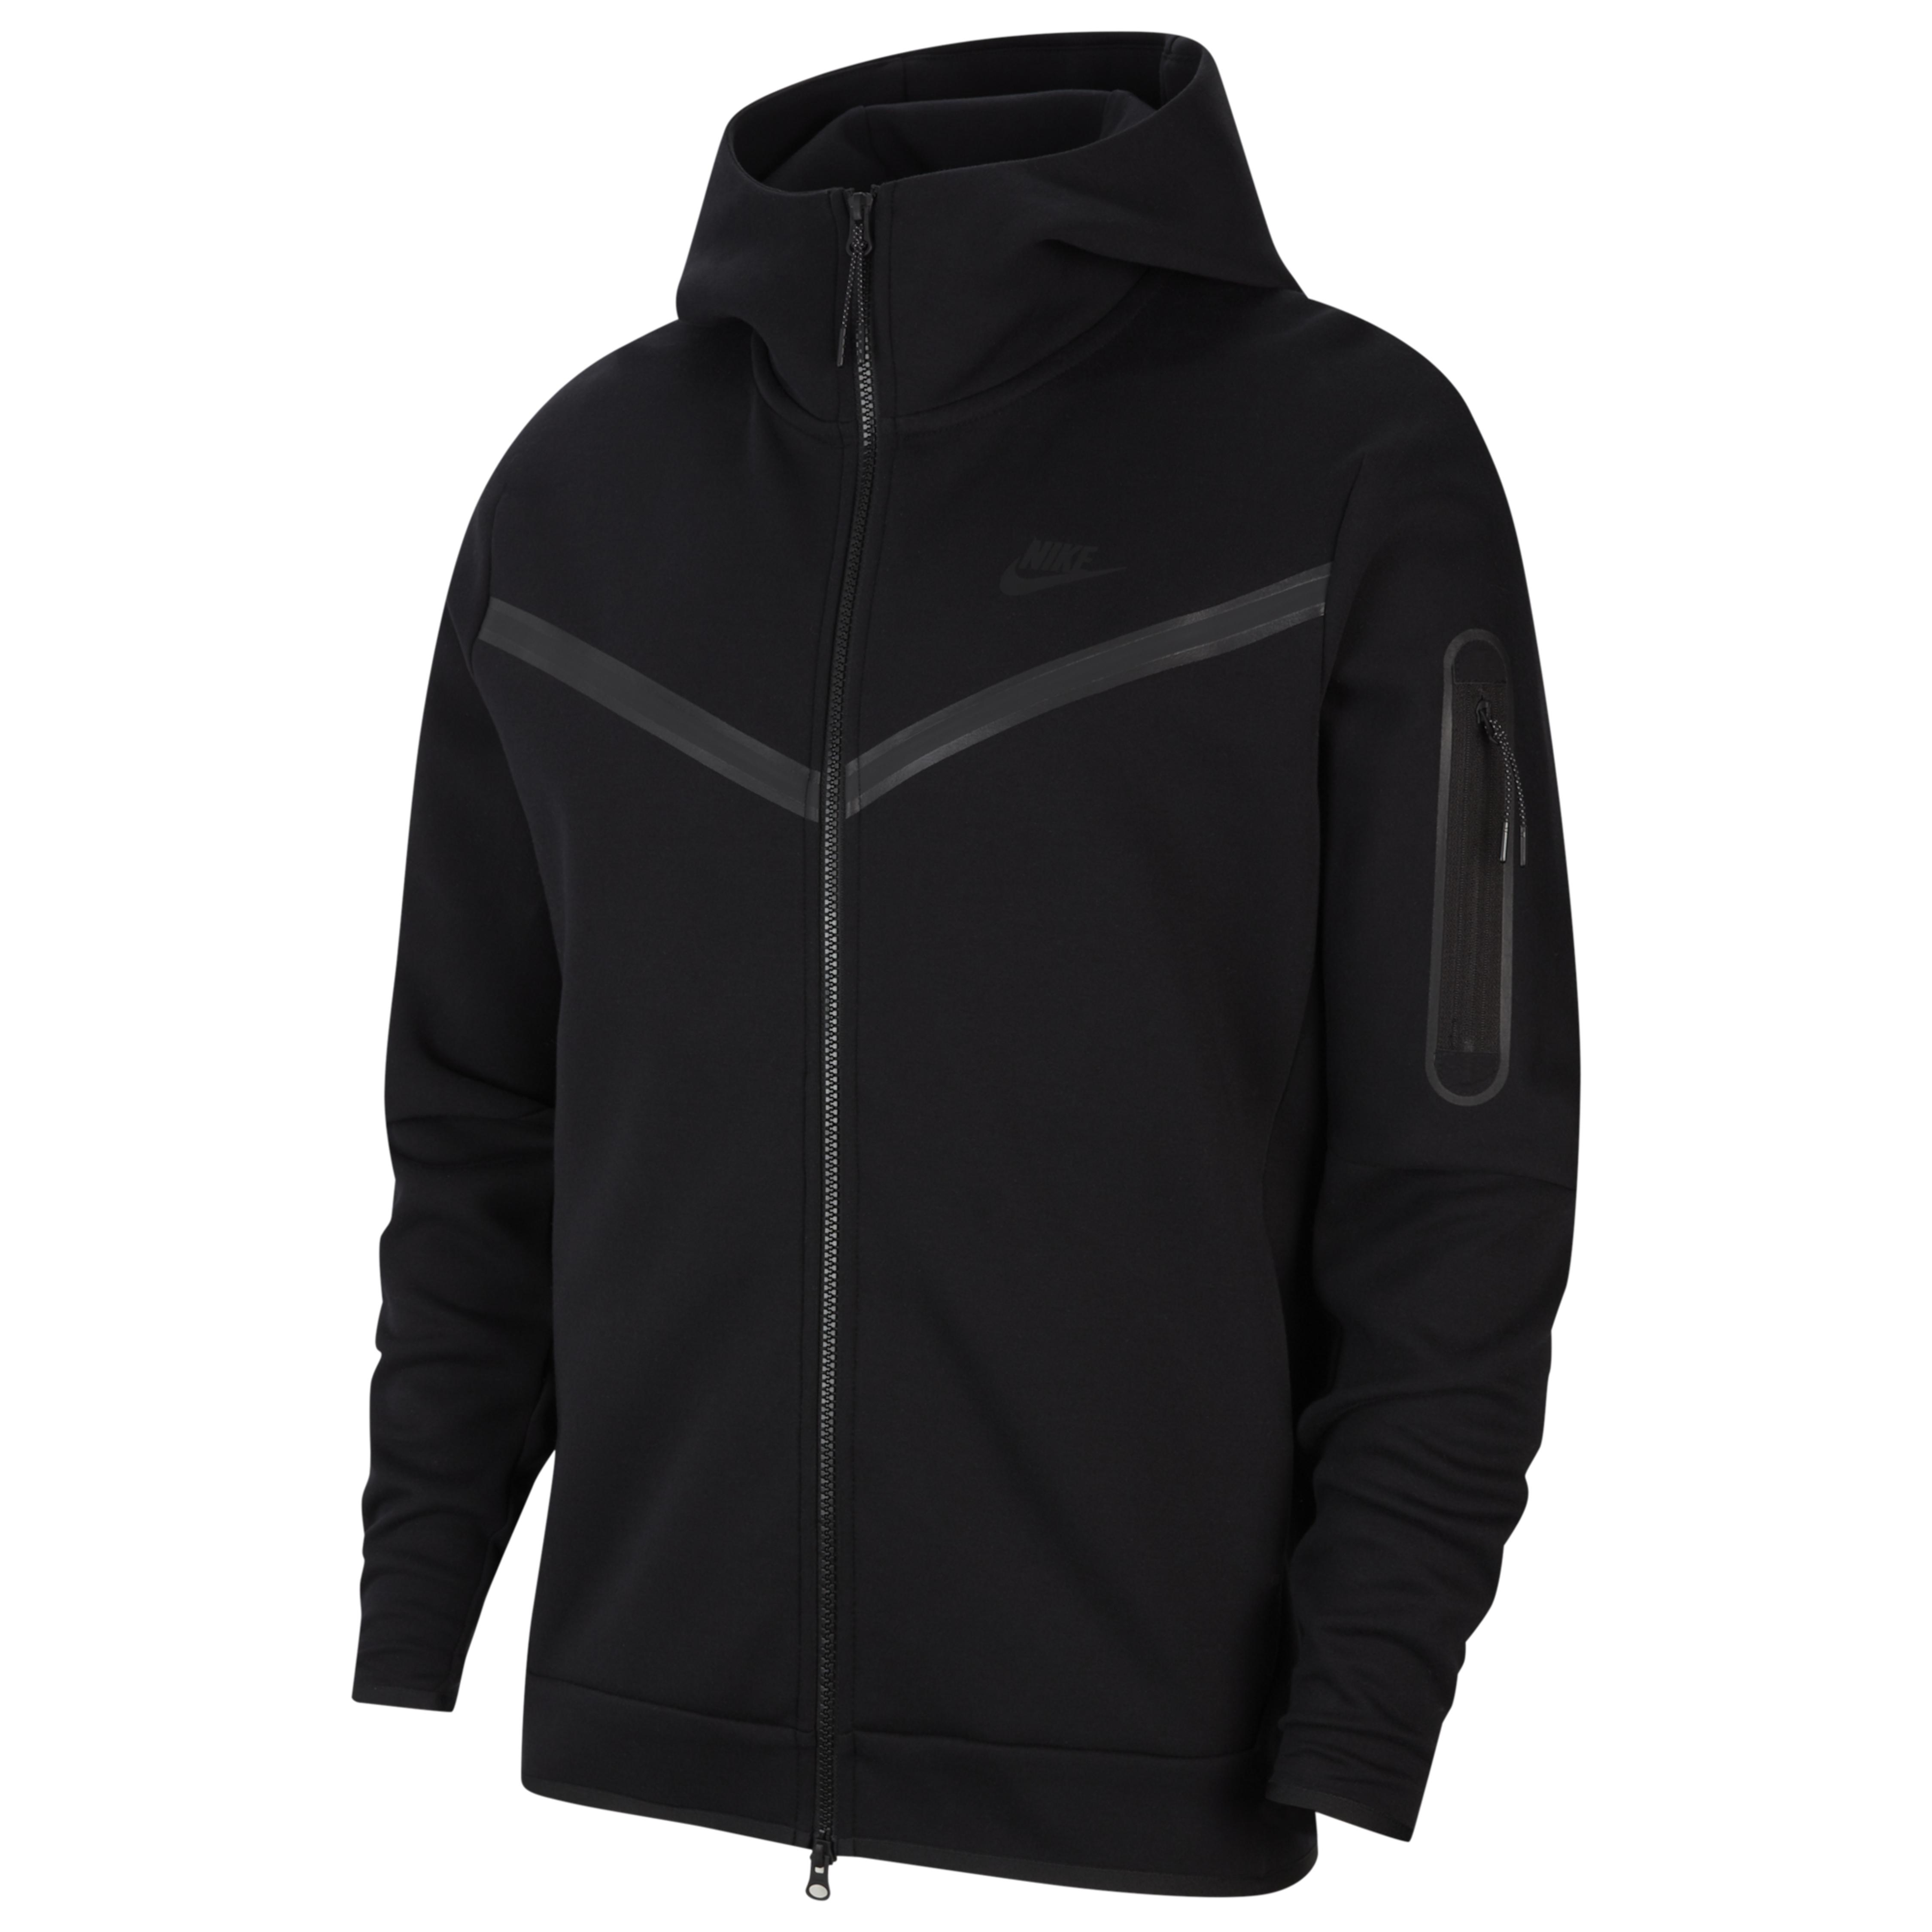 Nike Tech Fleece Full-zip Hoodie in Black/Black (Black) for Men - Lyst